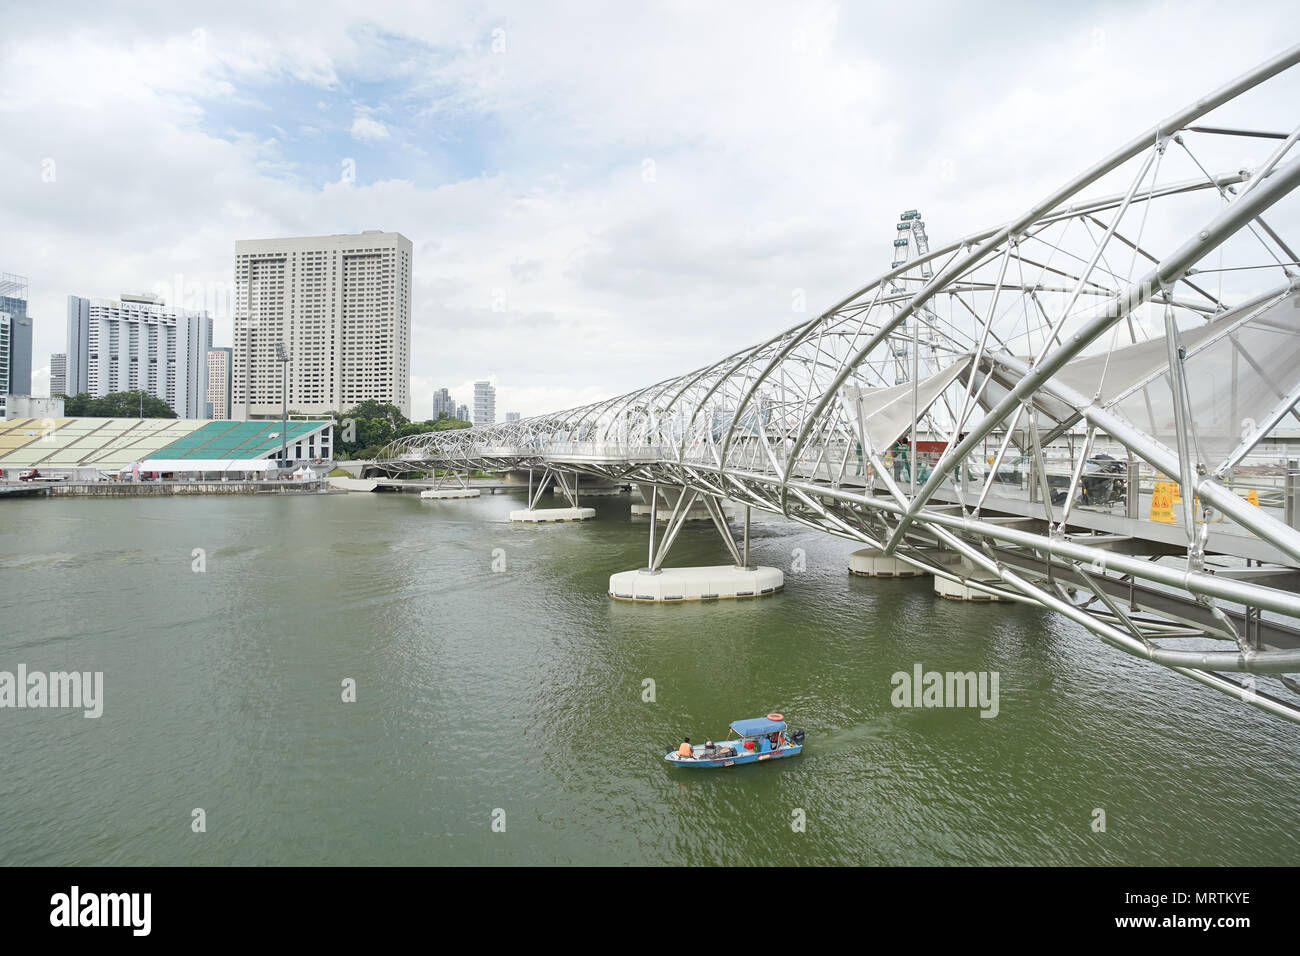 MARINA BAY, SINGAPORE - JAN 20, 2017: Landscape of Helix Bridge nearly to The Marina Bay Sands. Helix Bridge is a famous scene of Singapore travel des Stock Photo